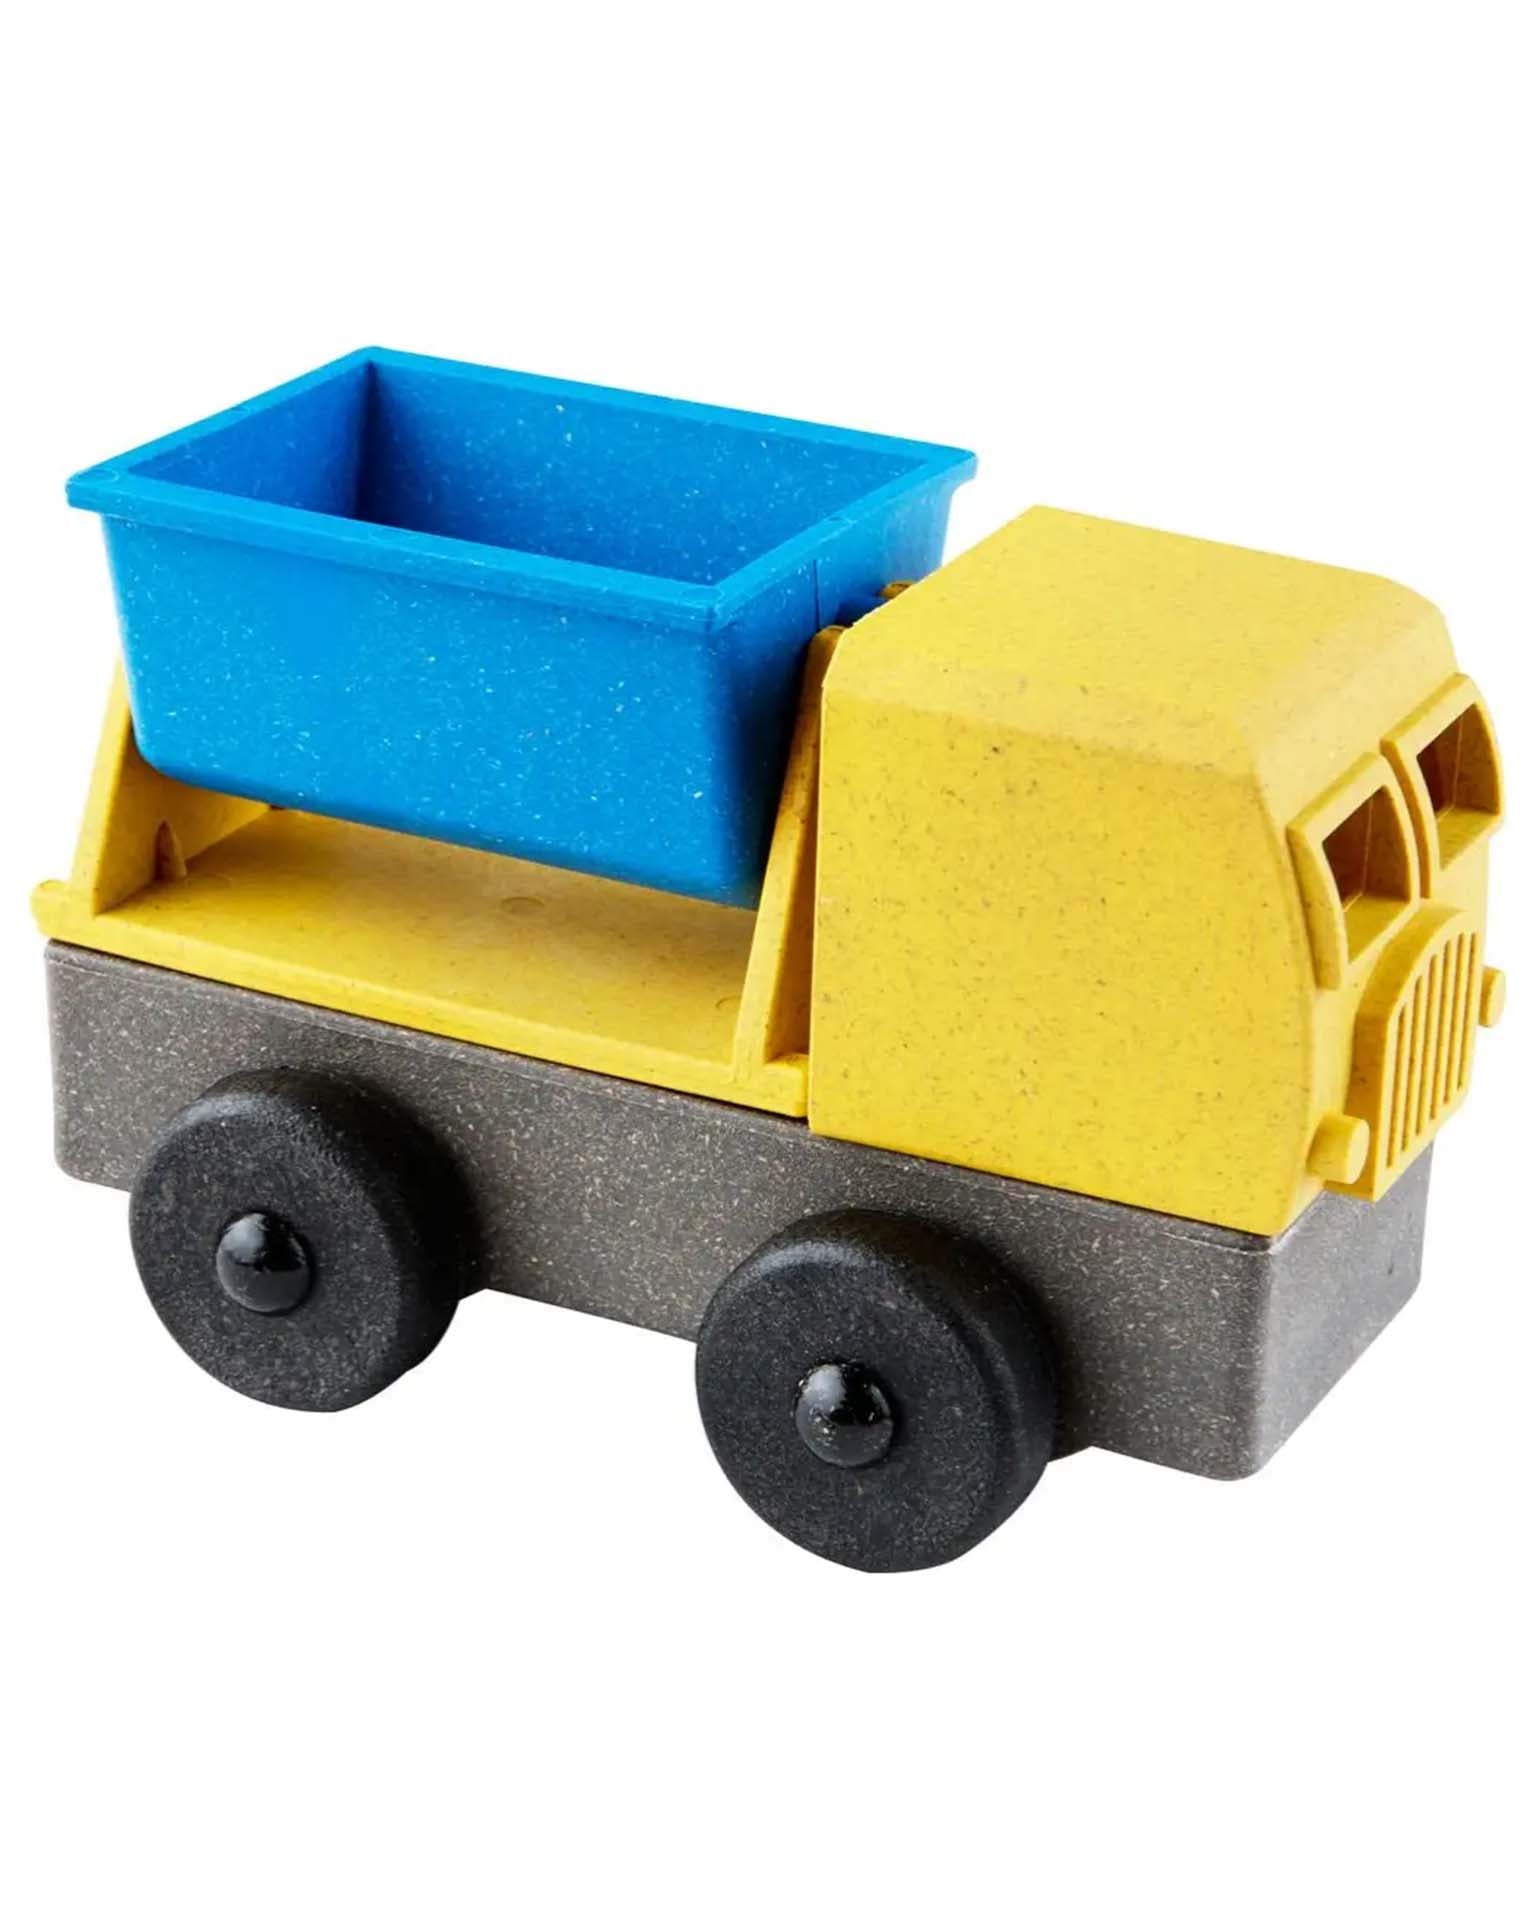 Little luke's toy factory play tipper truck